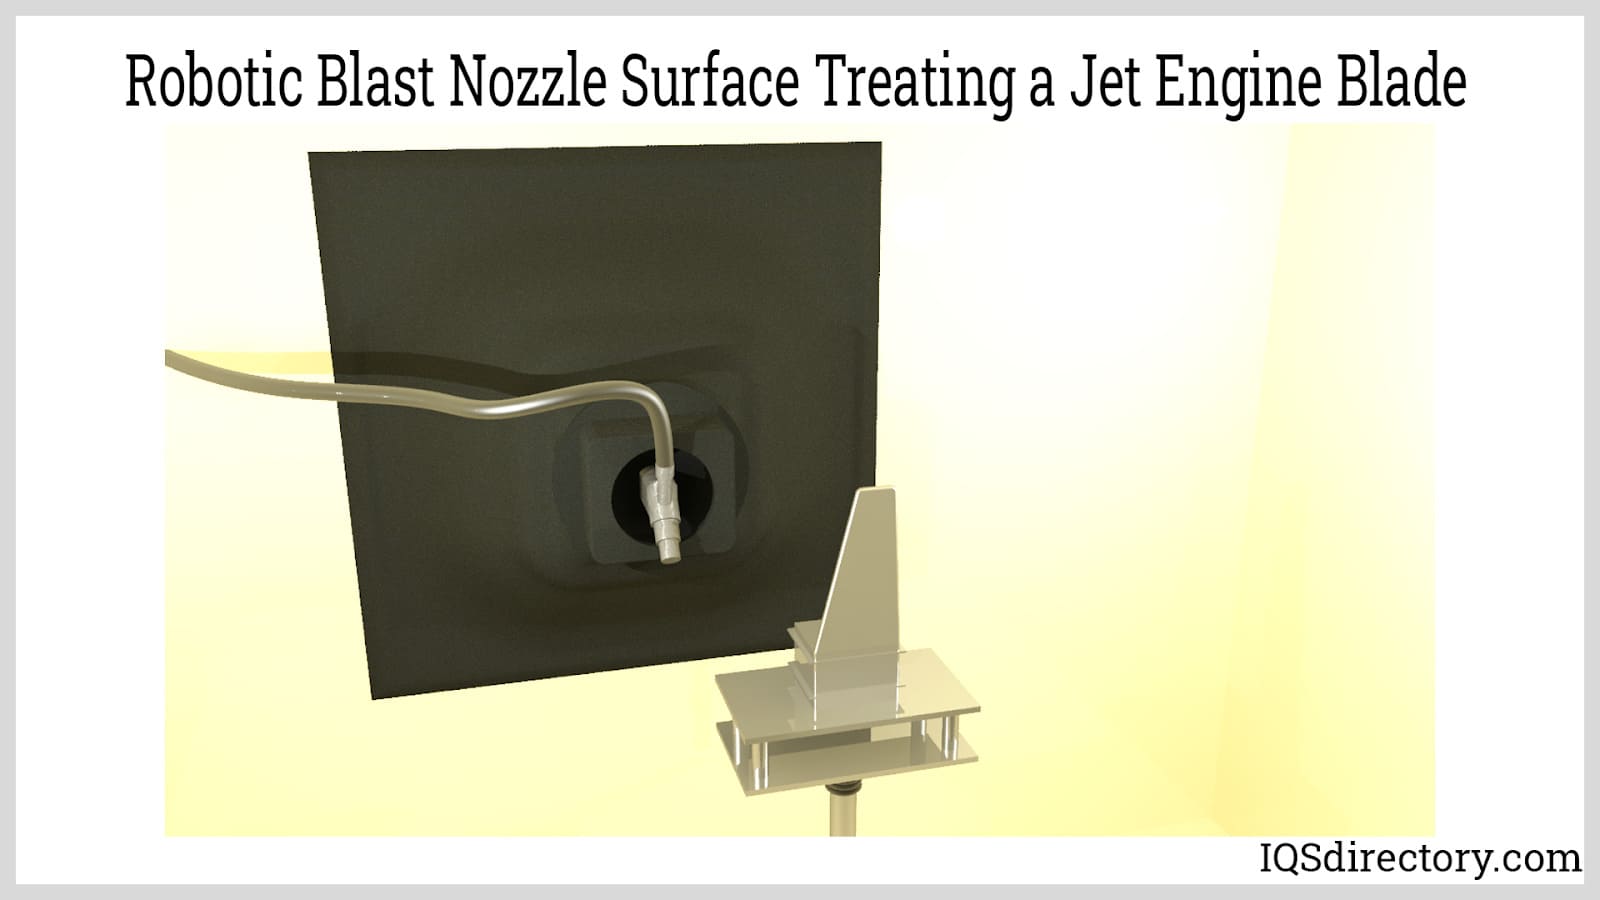 Robotic Blast Nozzle Surface Treating a Jet Engine Blade